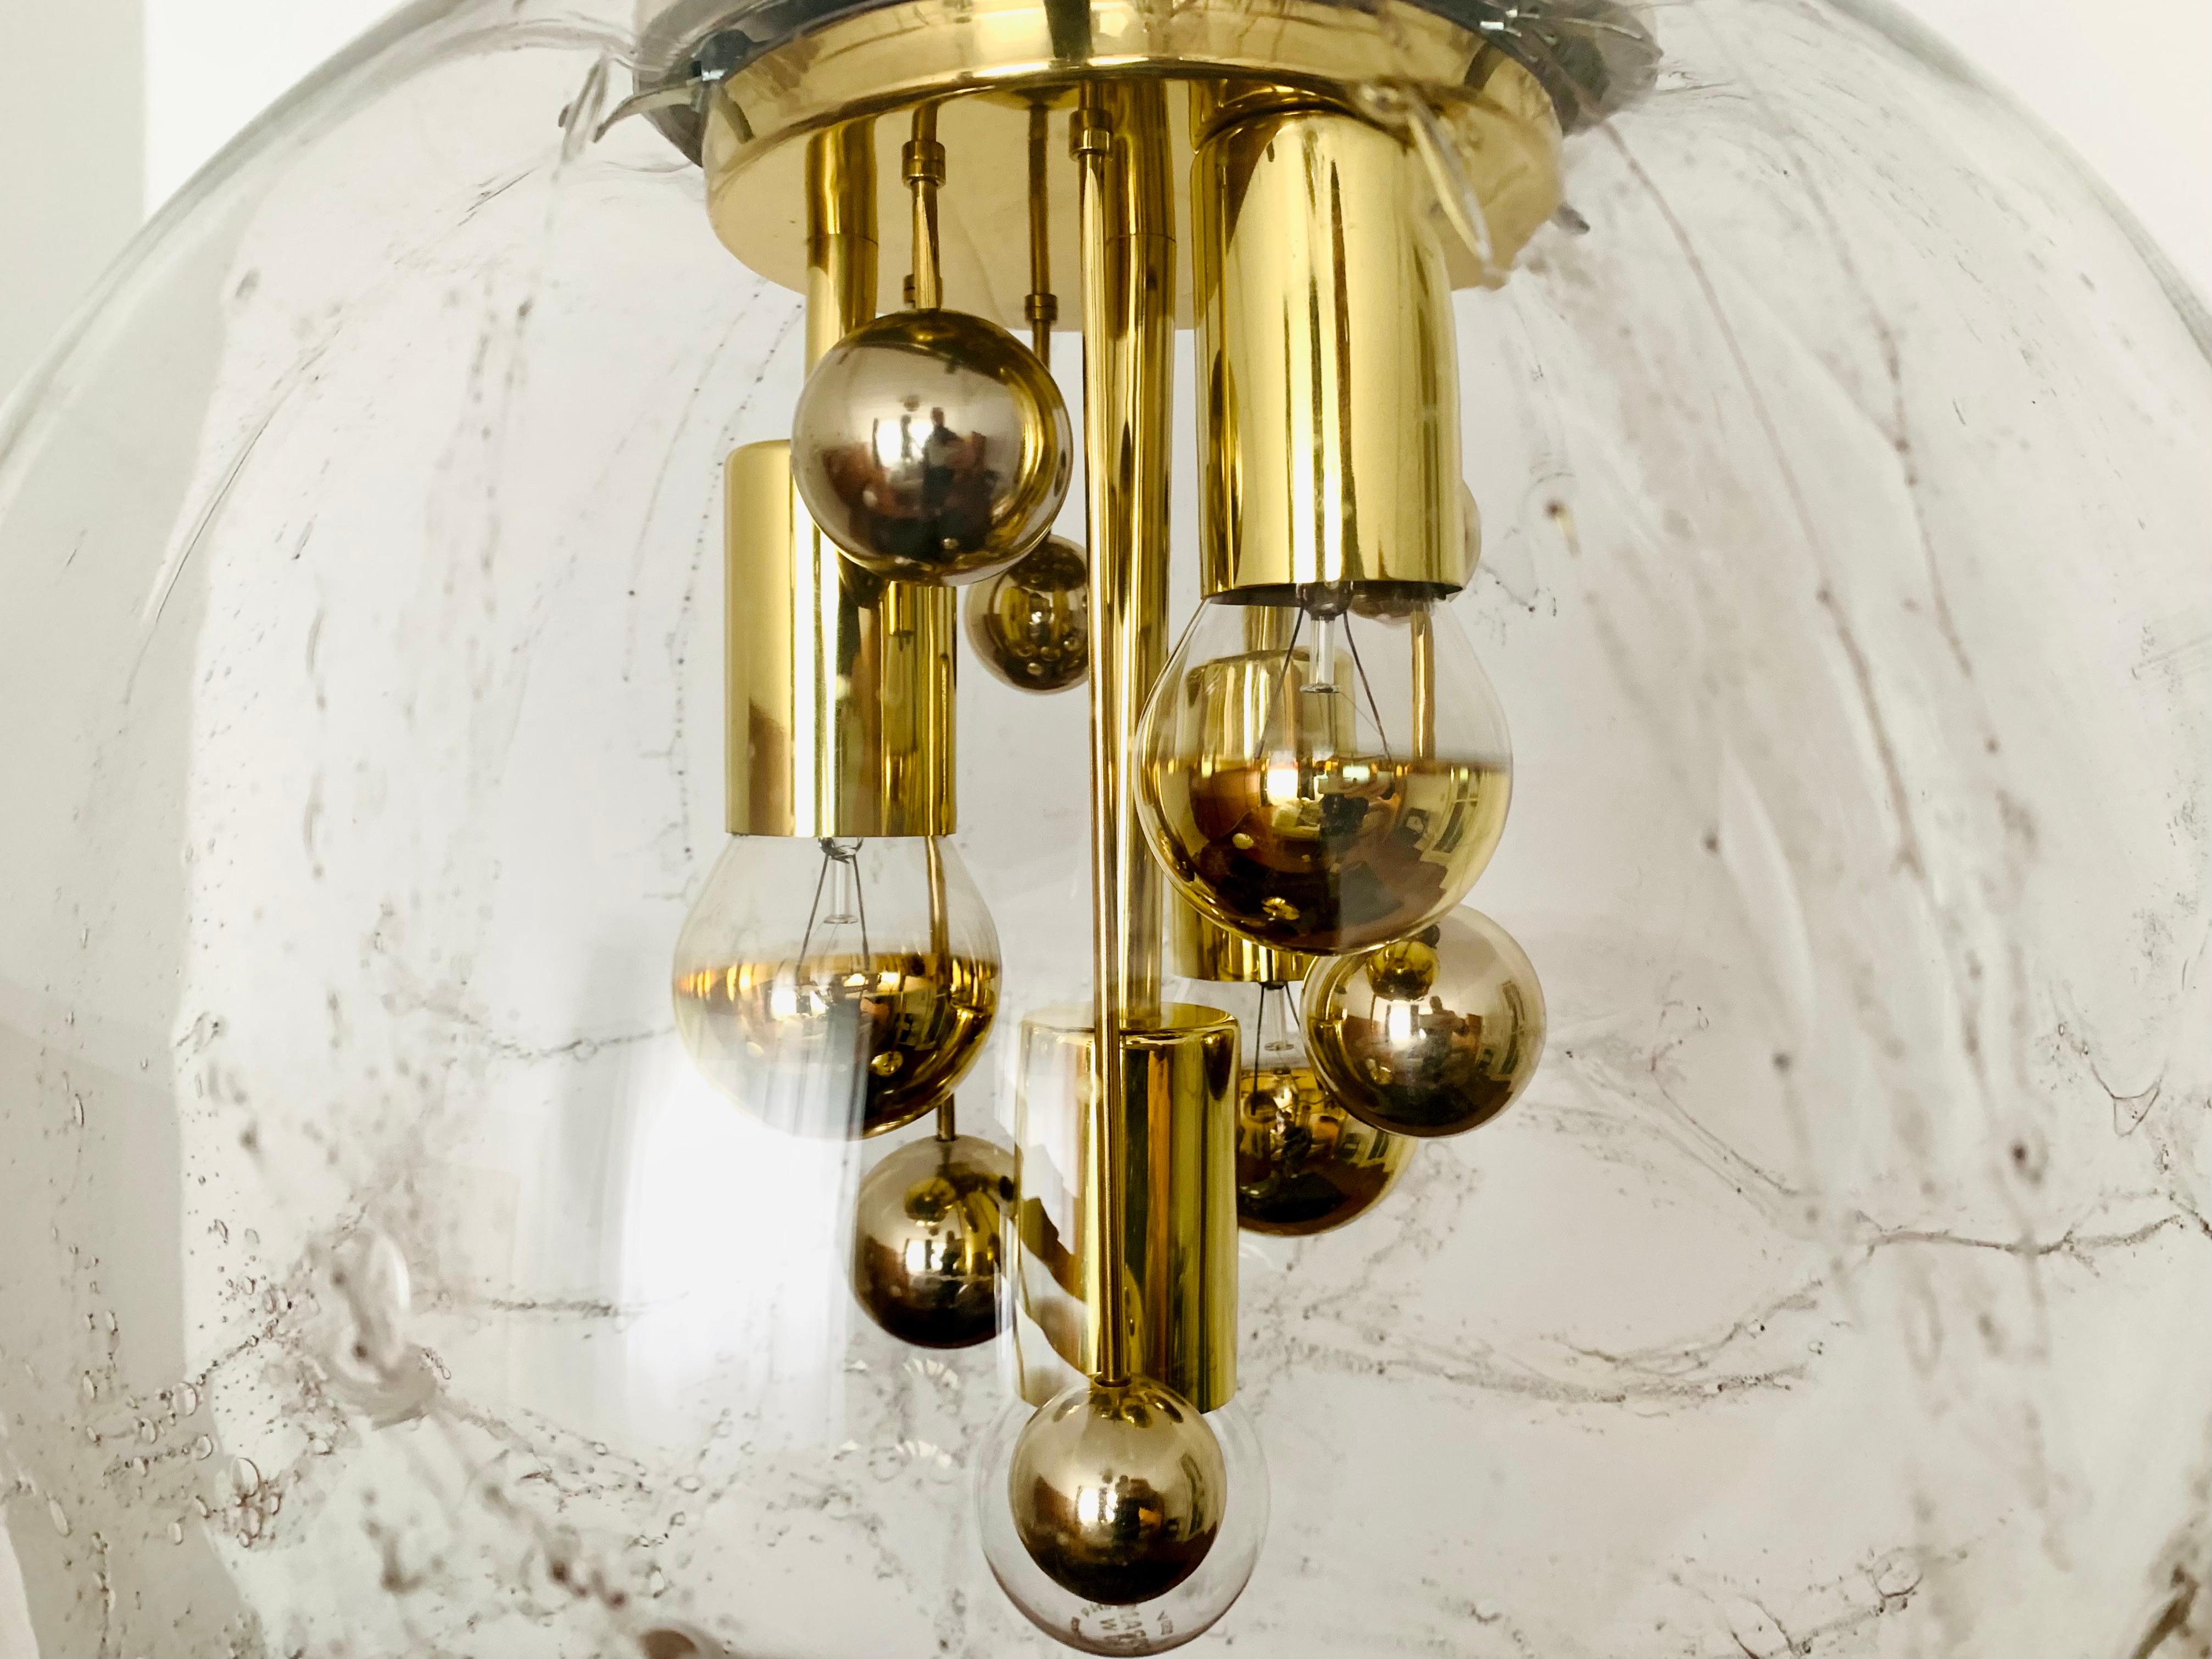 Big Ball Glass Pendant Lamp by Doria In Good Condition For Sale In München, DE